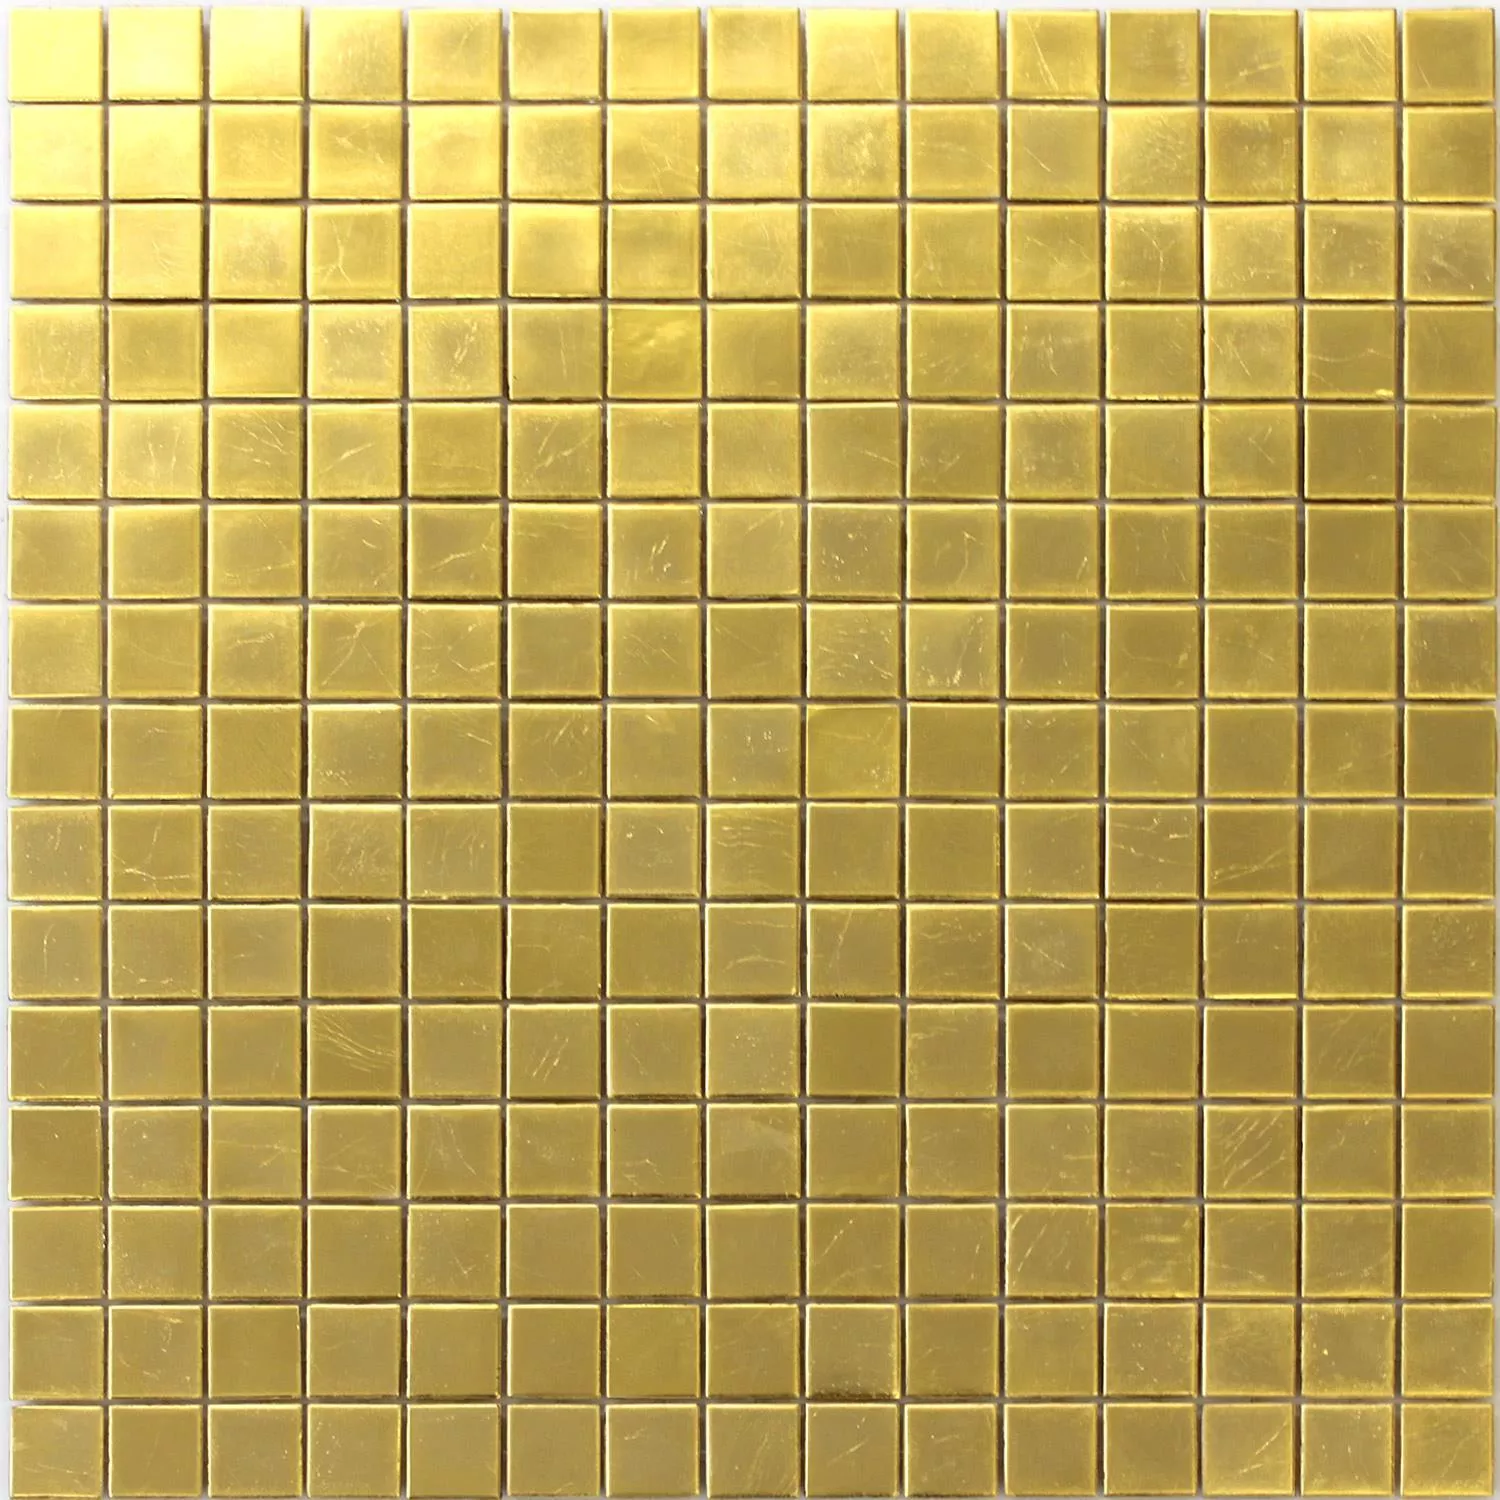 Mozaik Pločice Trend-Vi Staklo Zlatni Listići 24 Karat 2x2cm